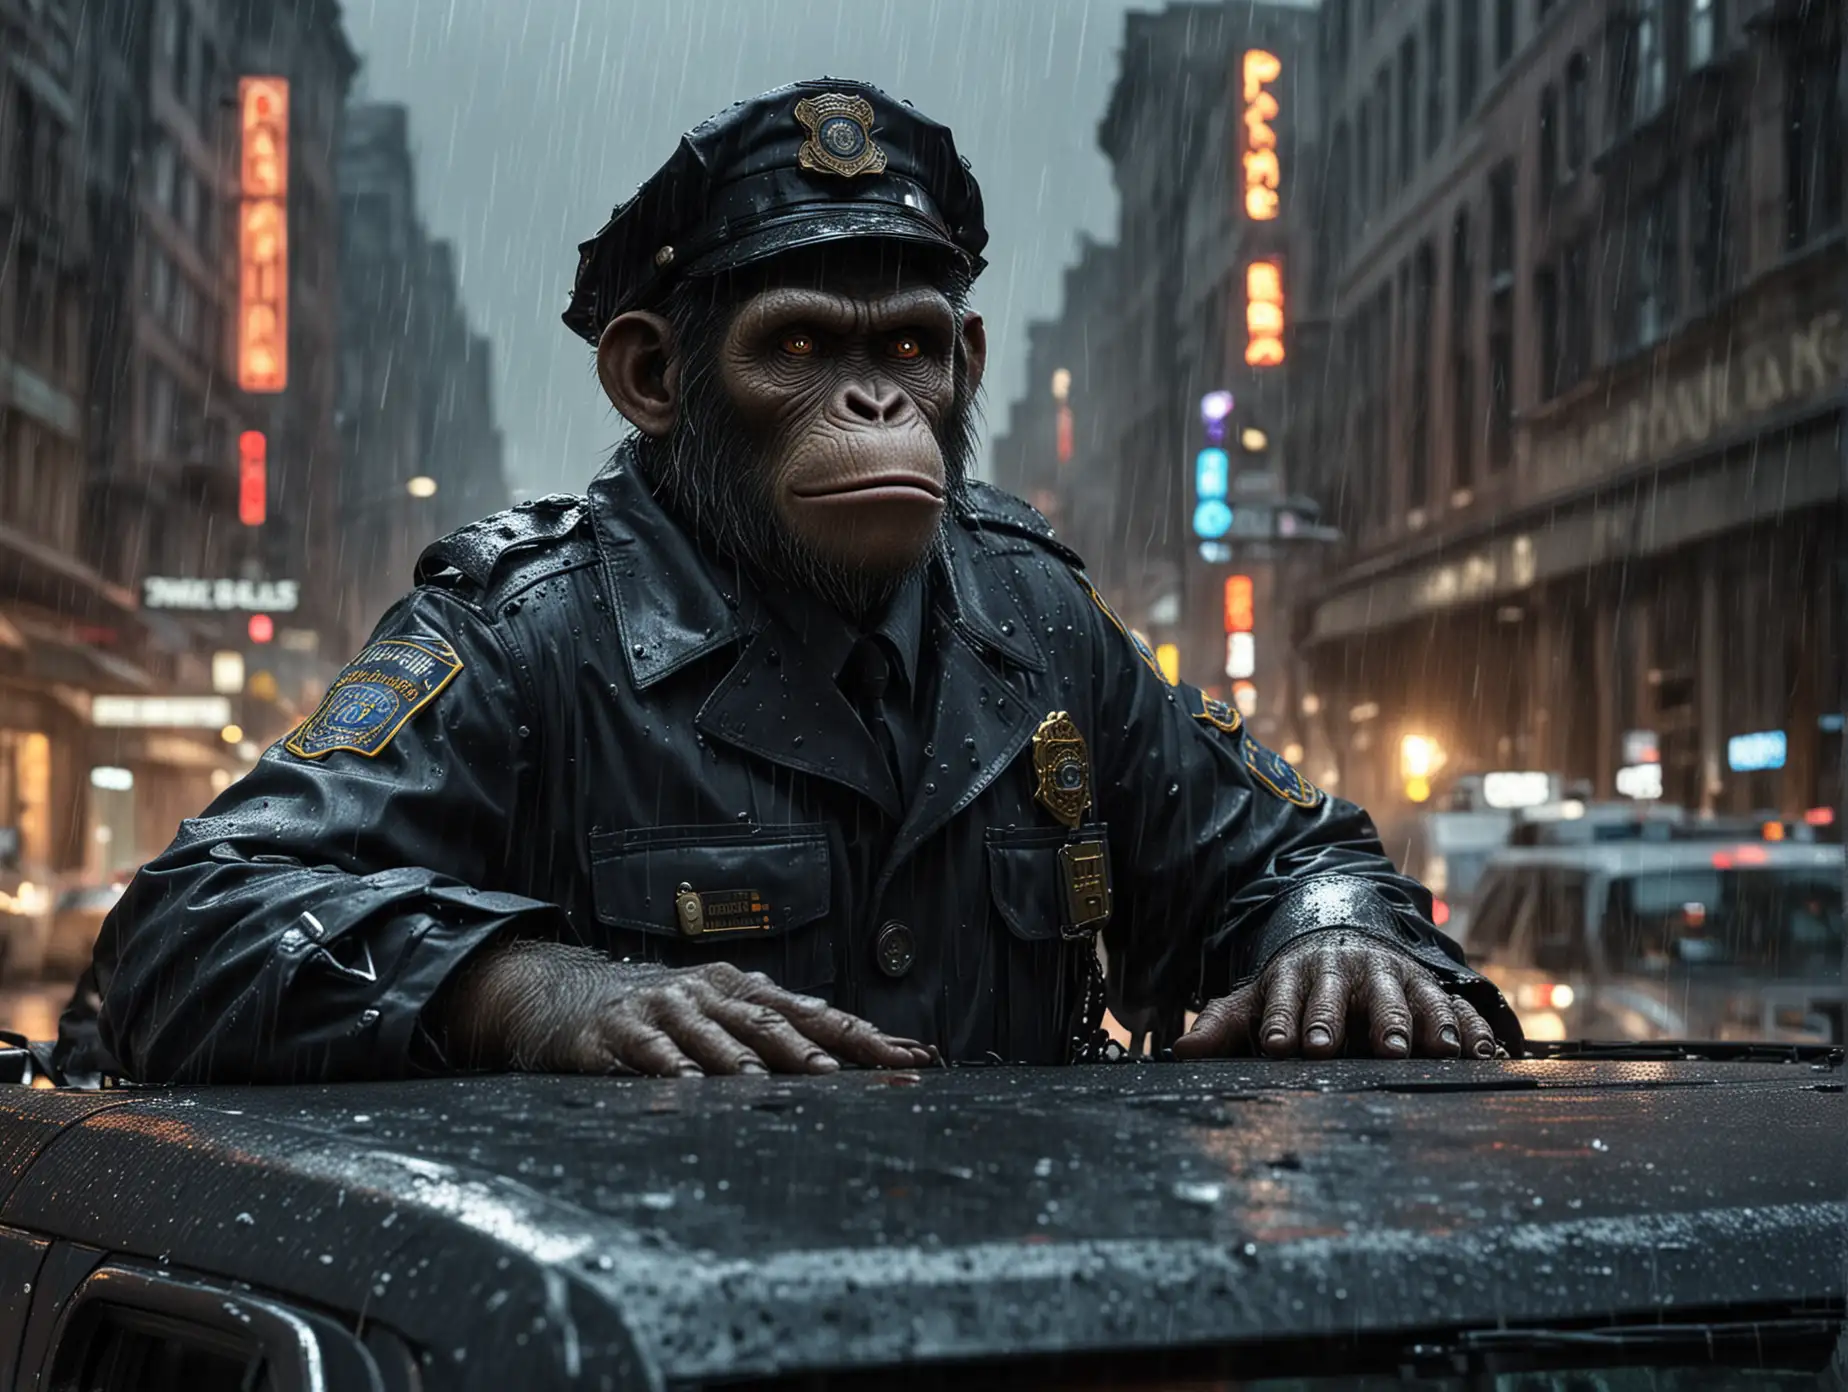 Gotham-City-Ape-Police-Officer-in-Rainy-Night-Patrol